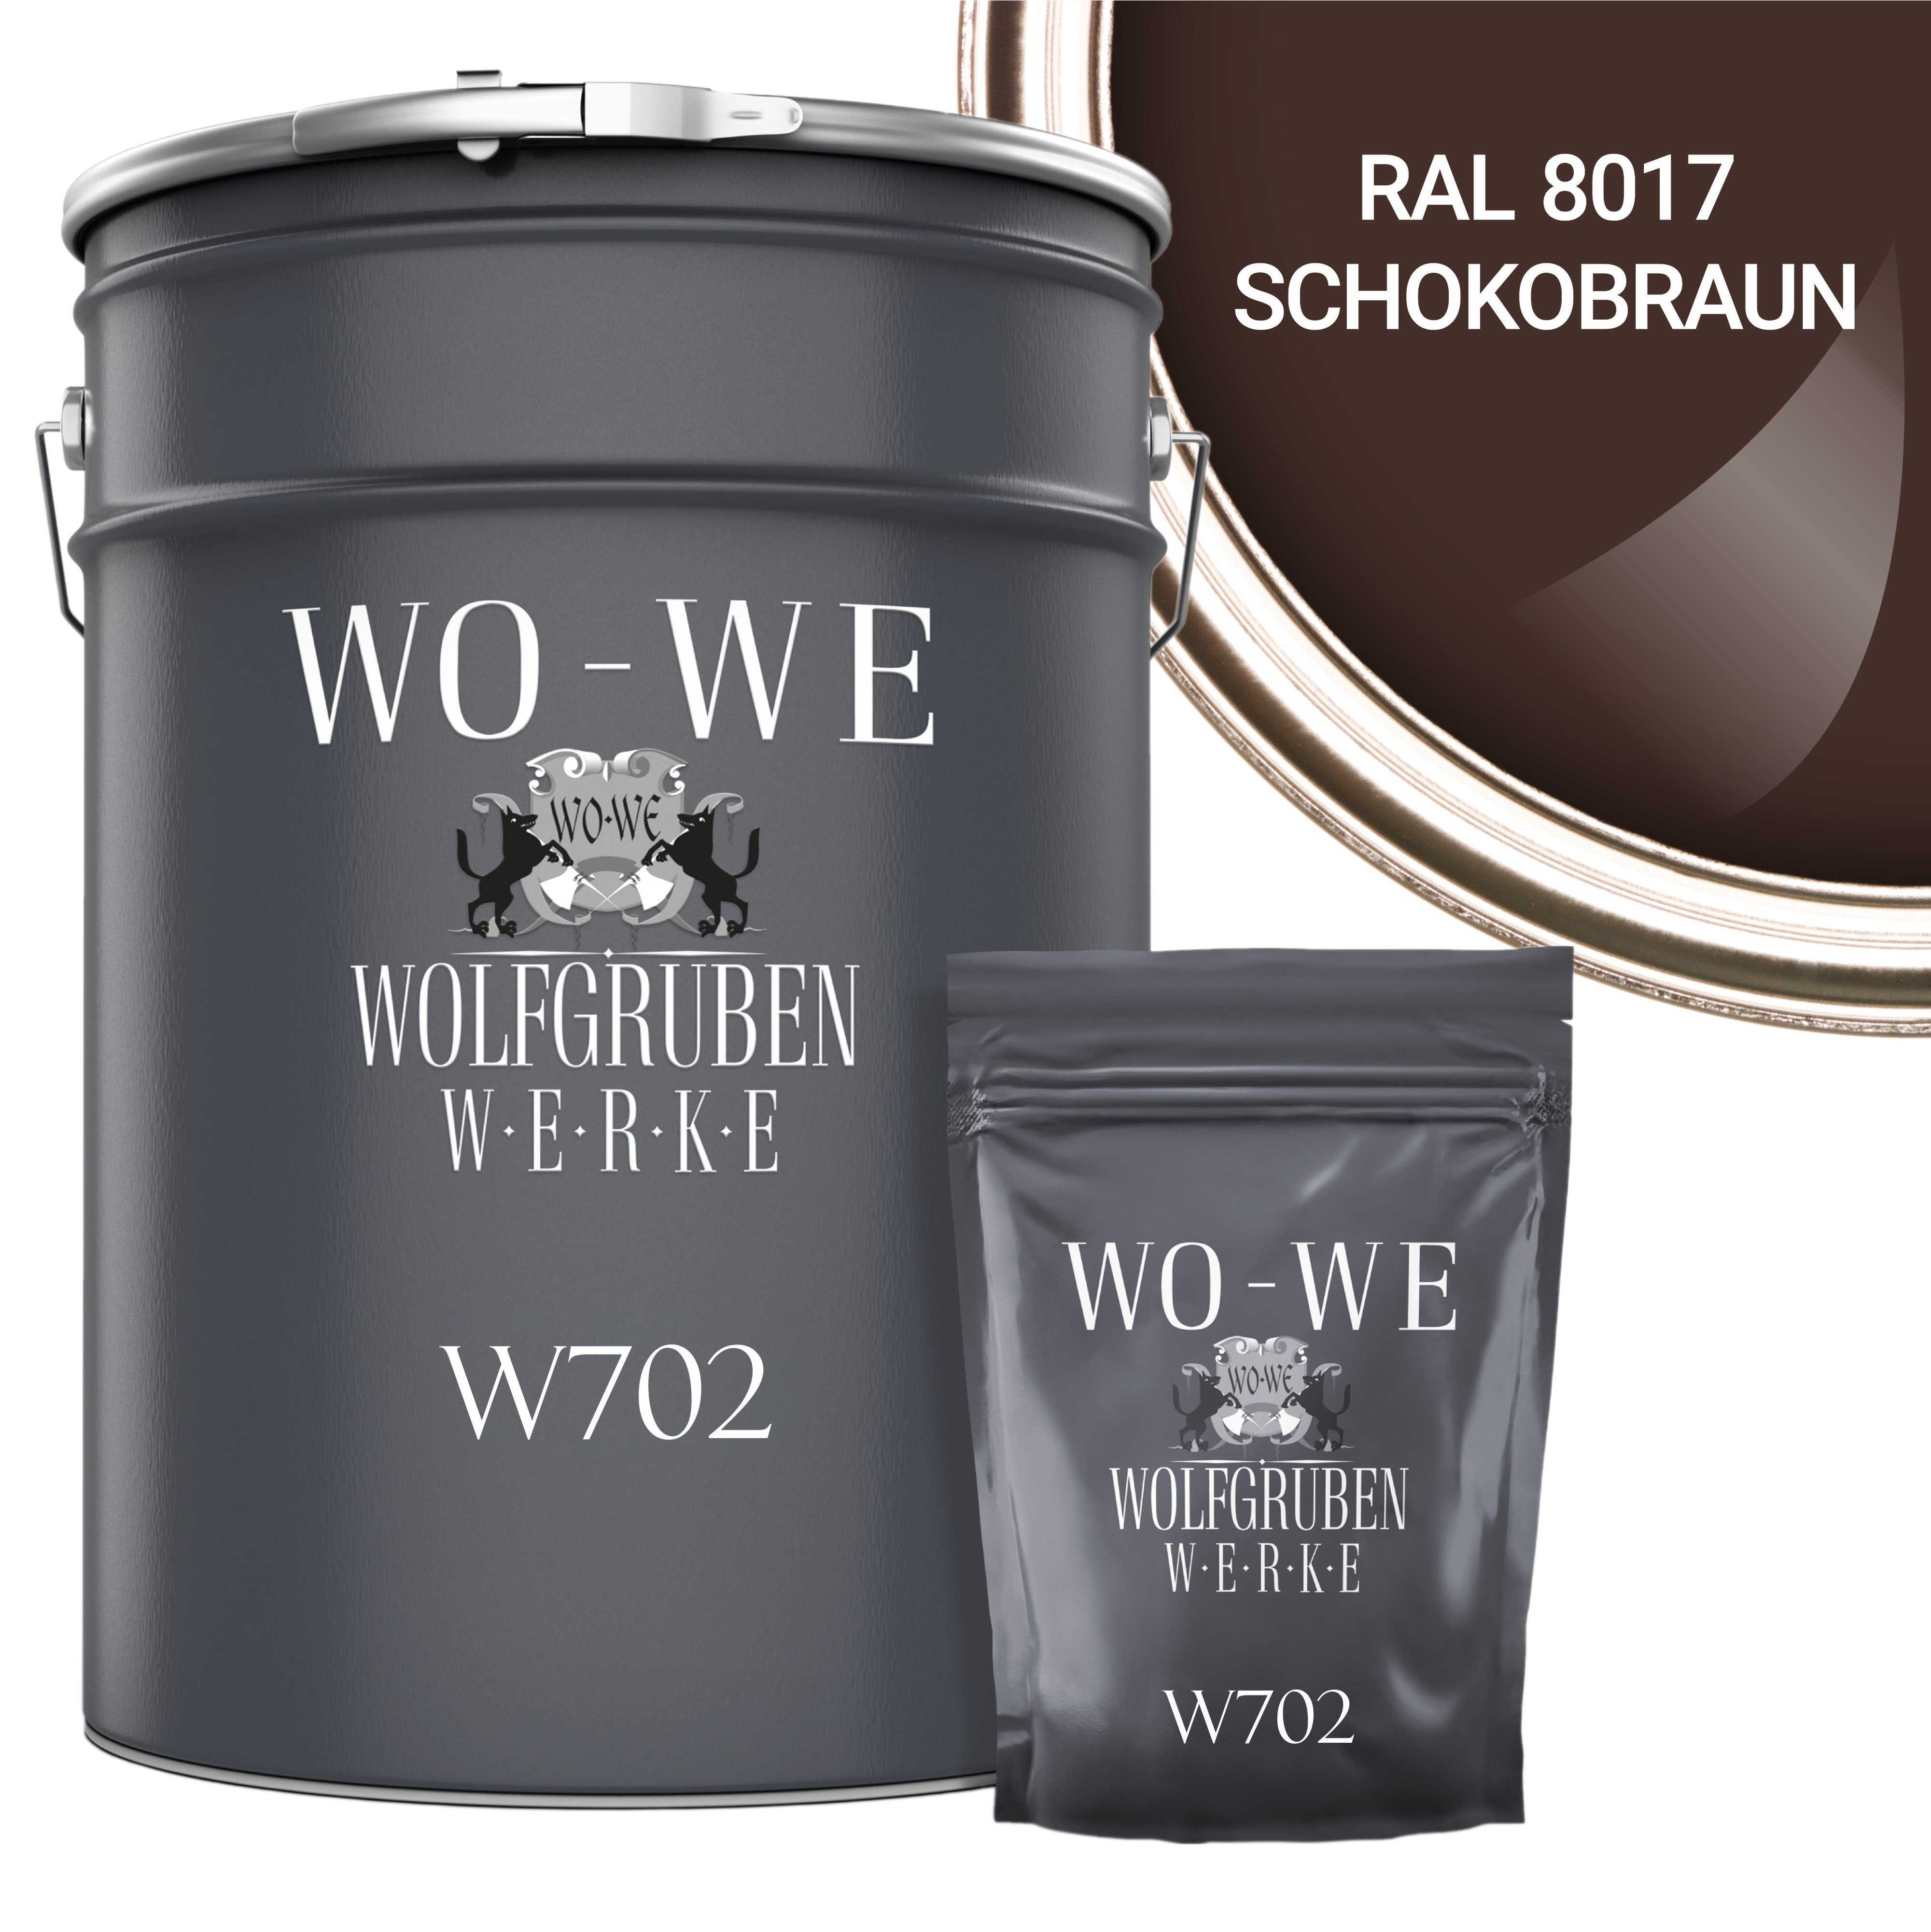 WO-WE Bodenversiegelung 2K Garagenfarbe Bodenbeschichtung W702, 2,5-20Kg, Seidenglänzend, Epoxidharz RAL 8017 Schokoladenbraun